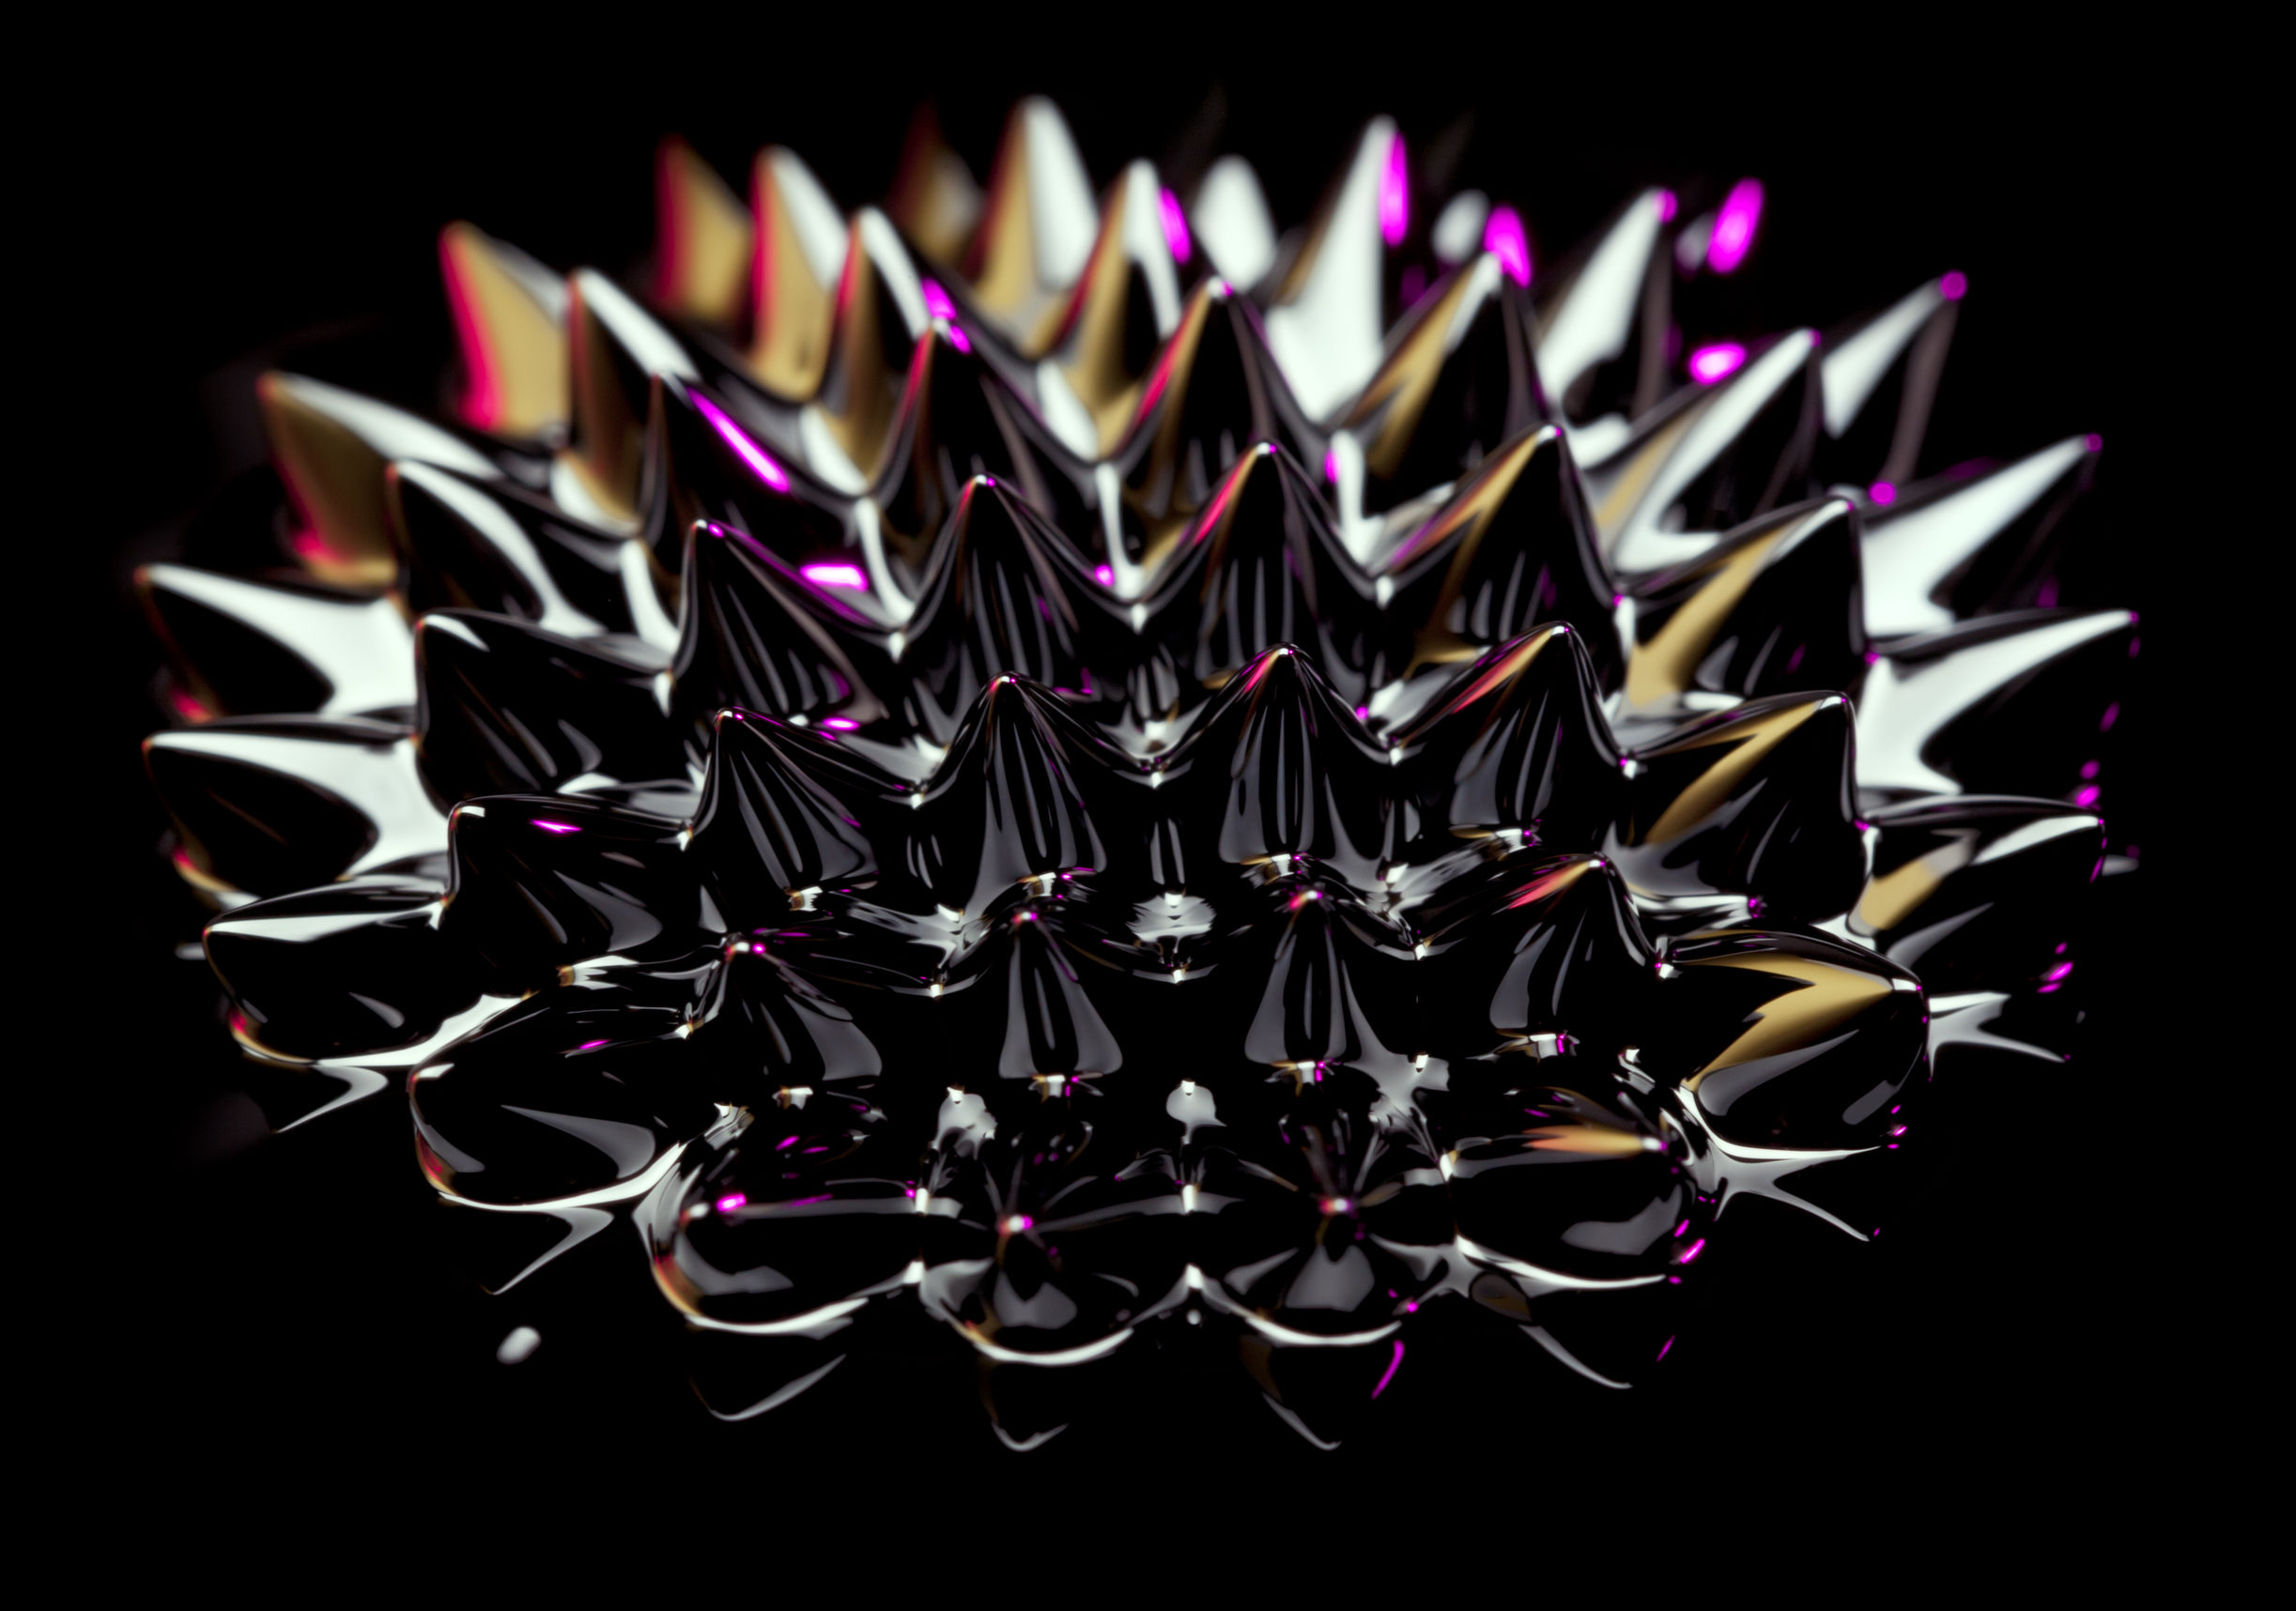 https://www.digitaltrends.com/wp-content/uploads/2017/02/ferrofluid2.jpg?fit=2445%2C1716&p=1